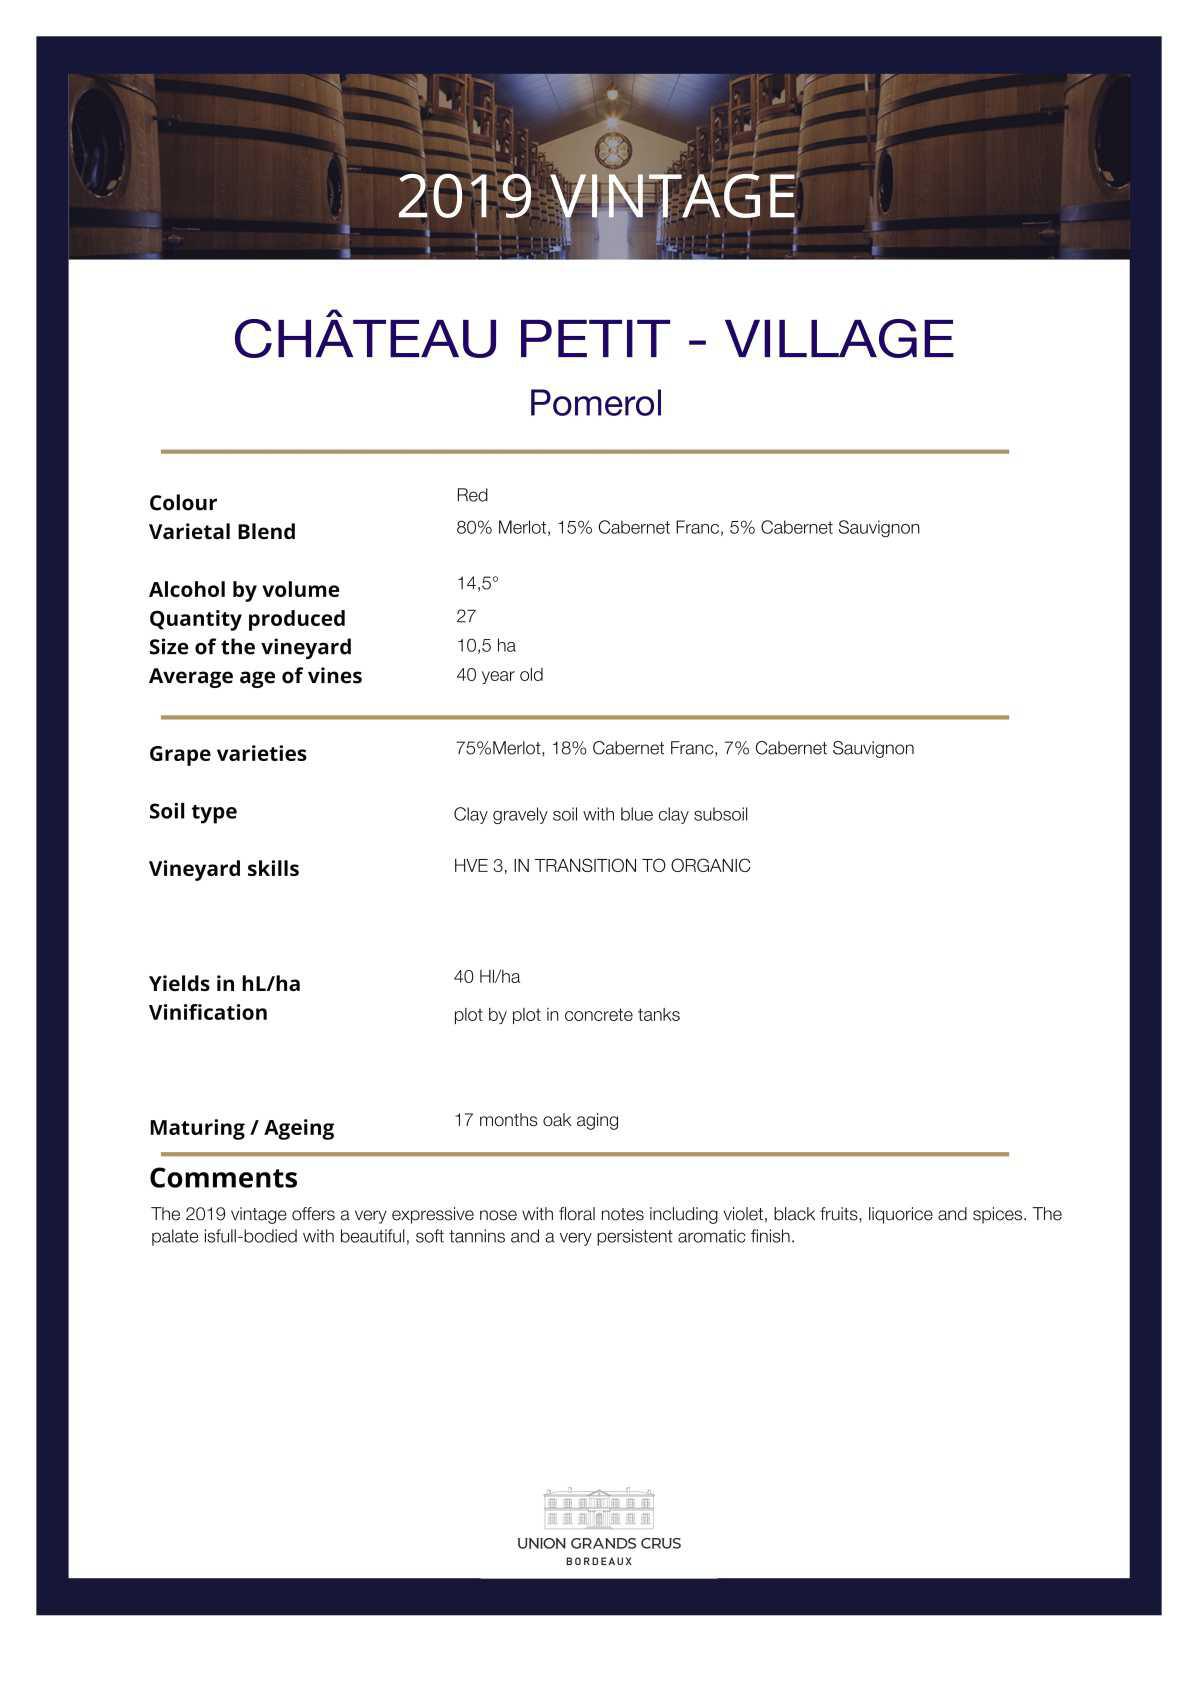 Château Petit - Village